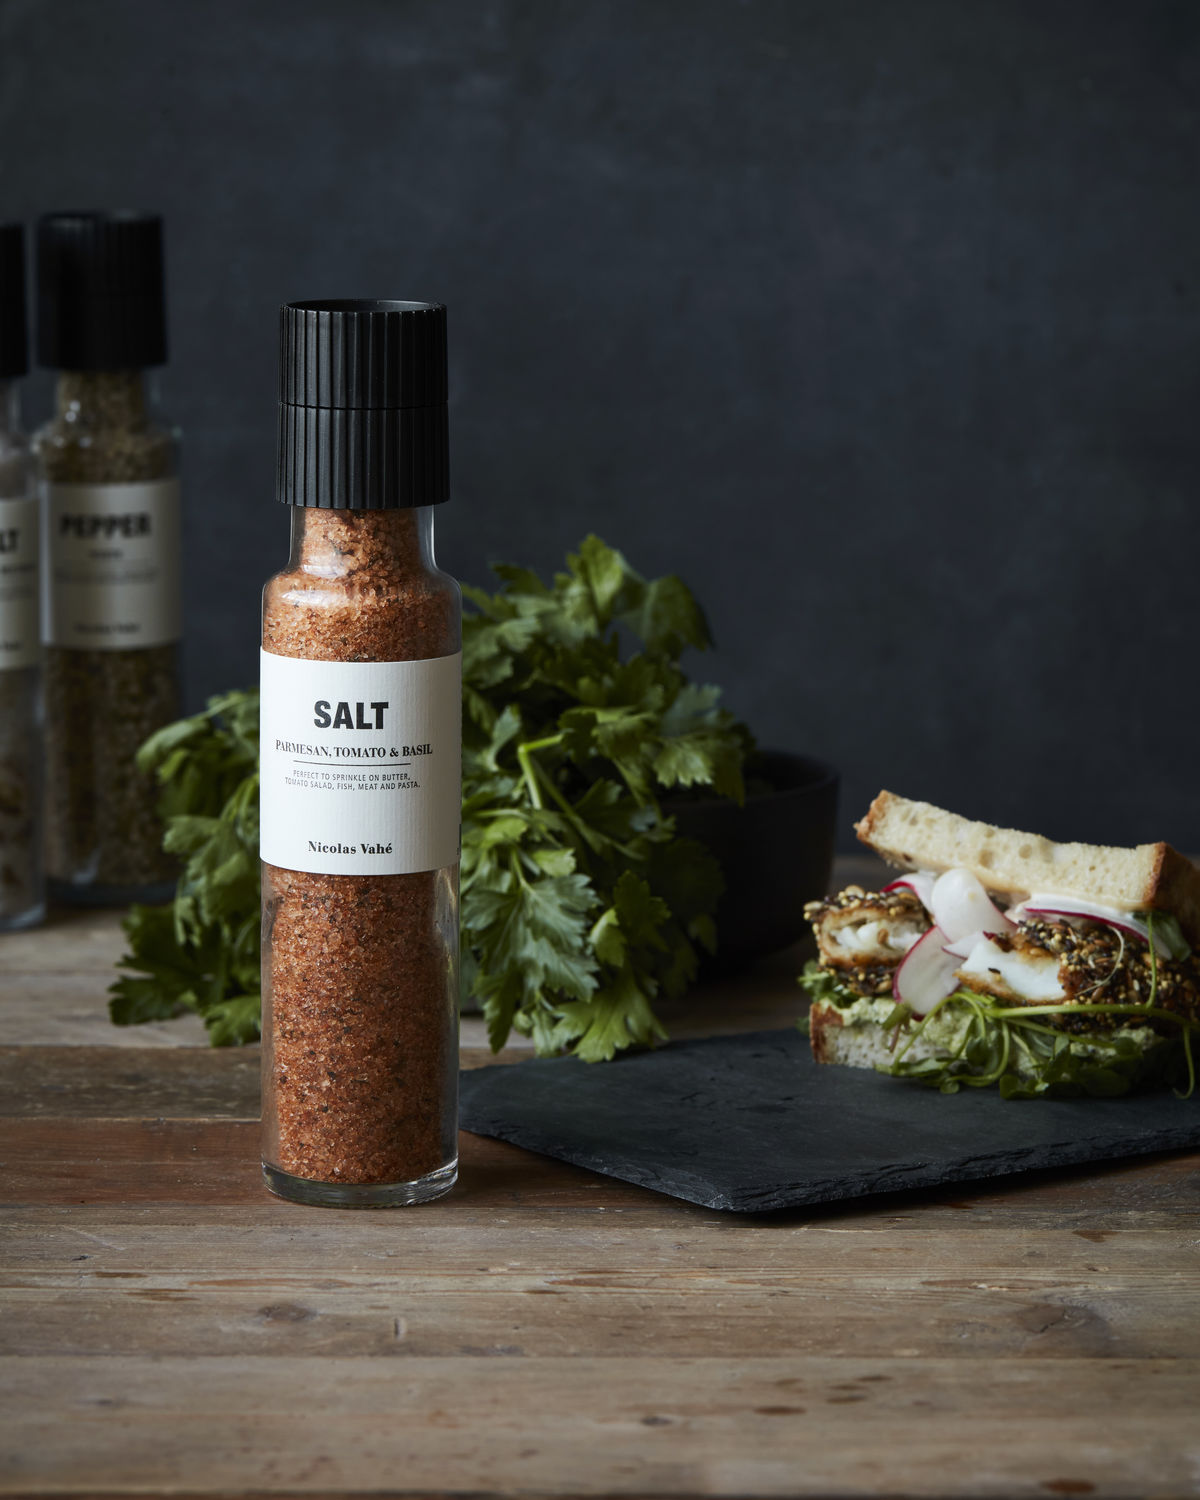 Salt, Parmesan, Tomato & Basil Café Society